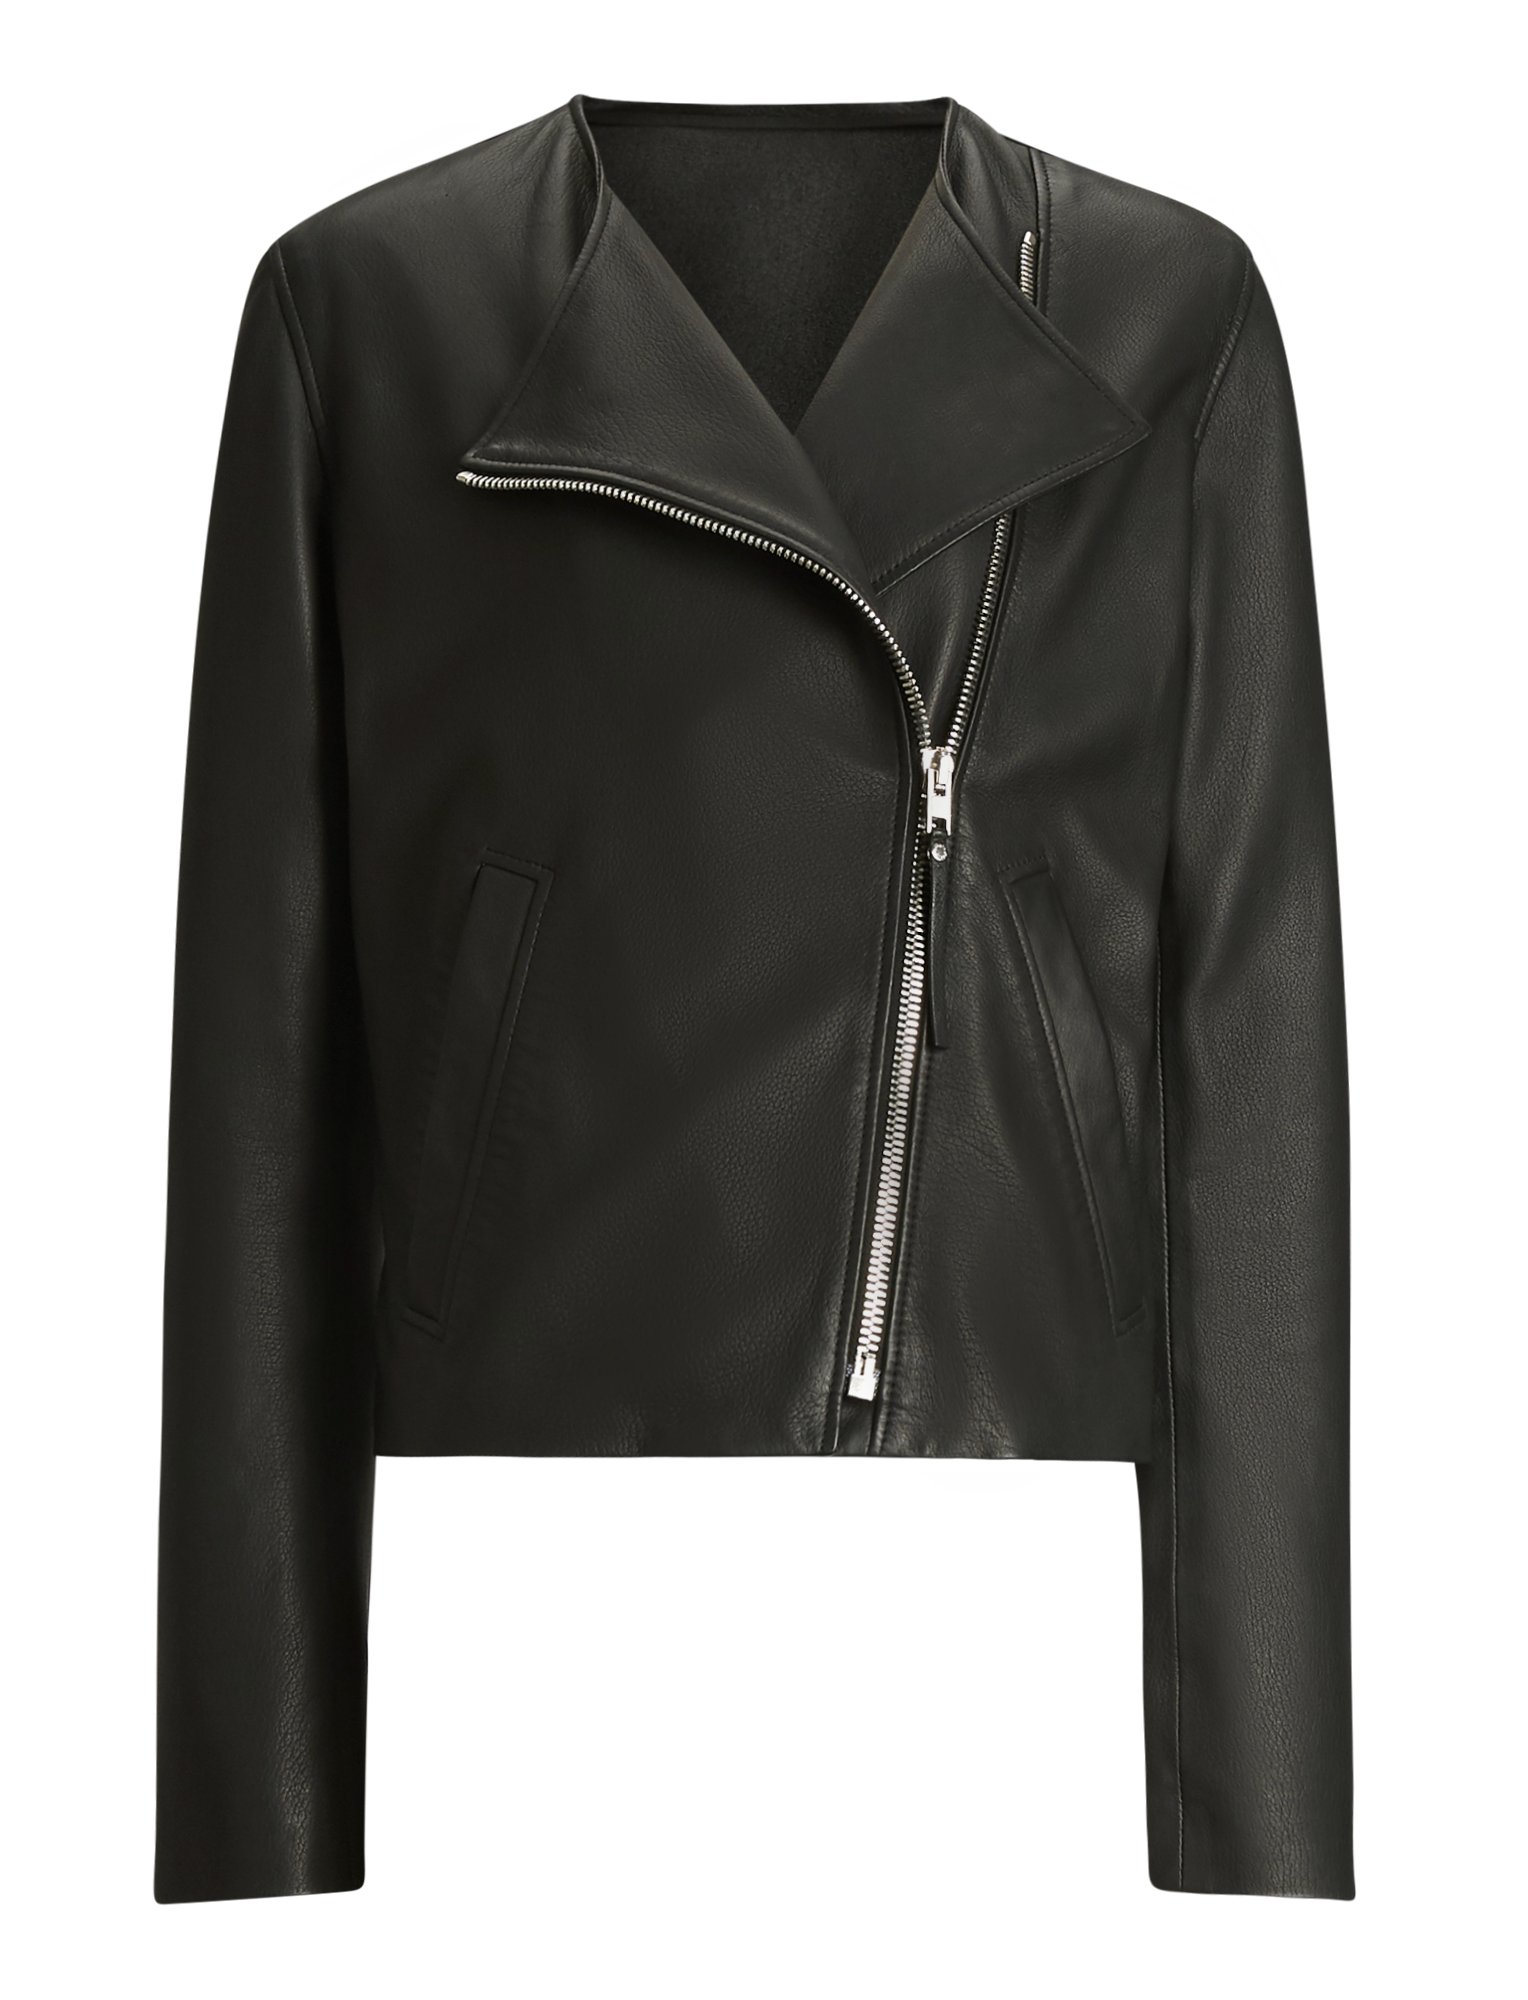 Leather Jacket Transparent Images